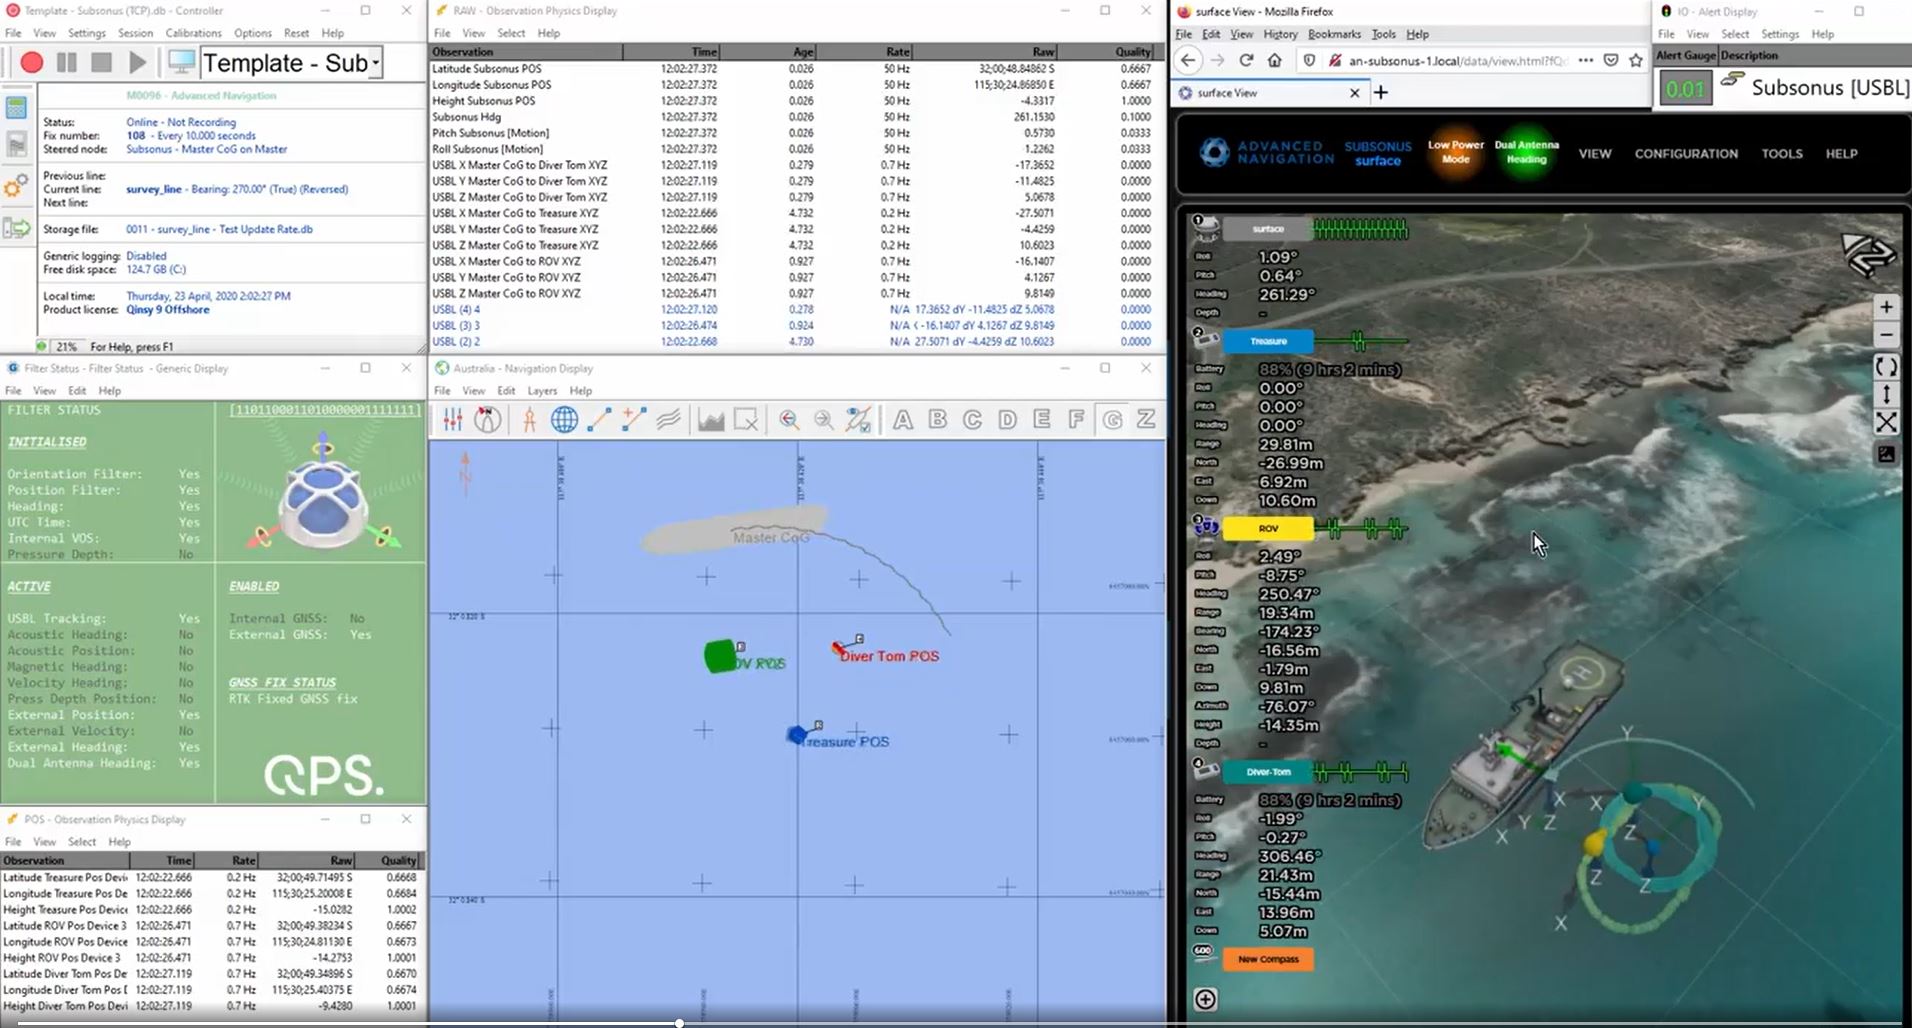 QINSY 9软件现己支持Advanced Navigation的SUBSONUS超短基线产品